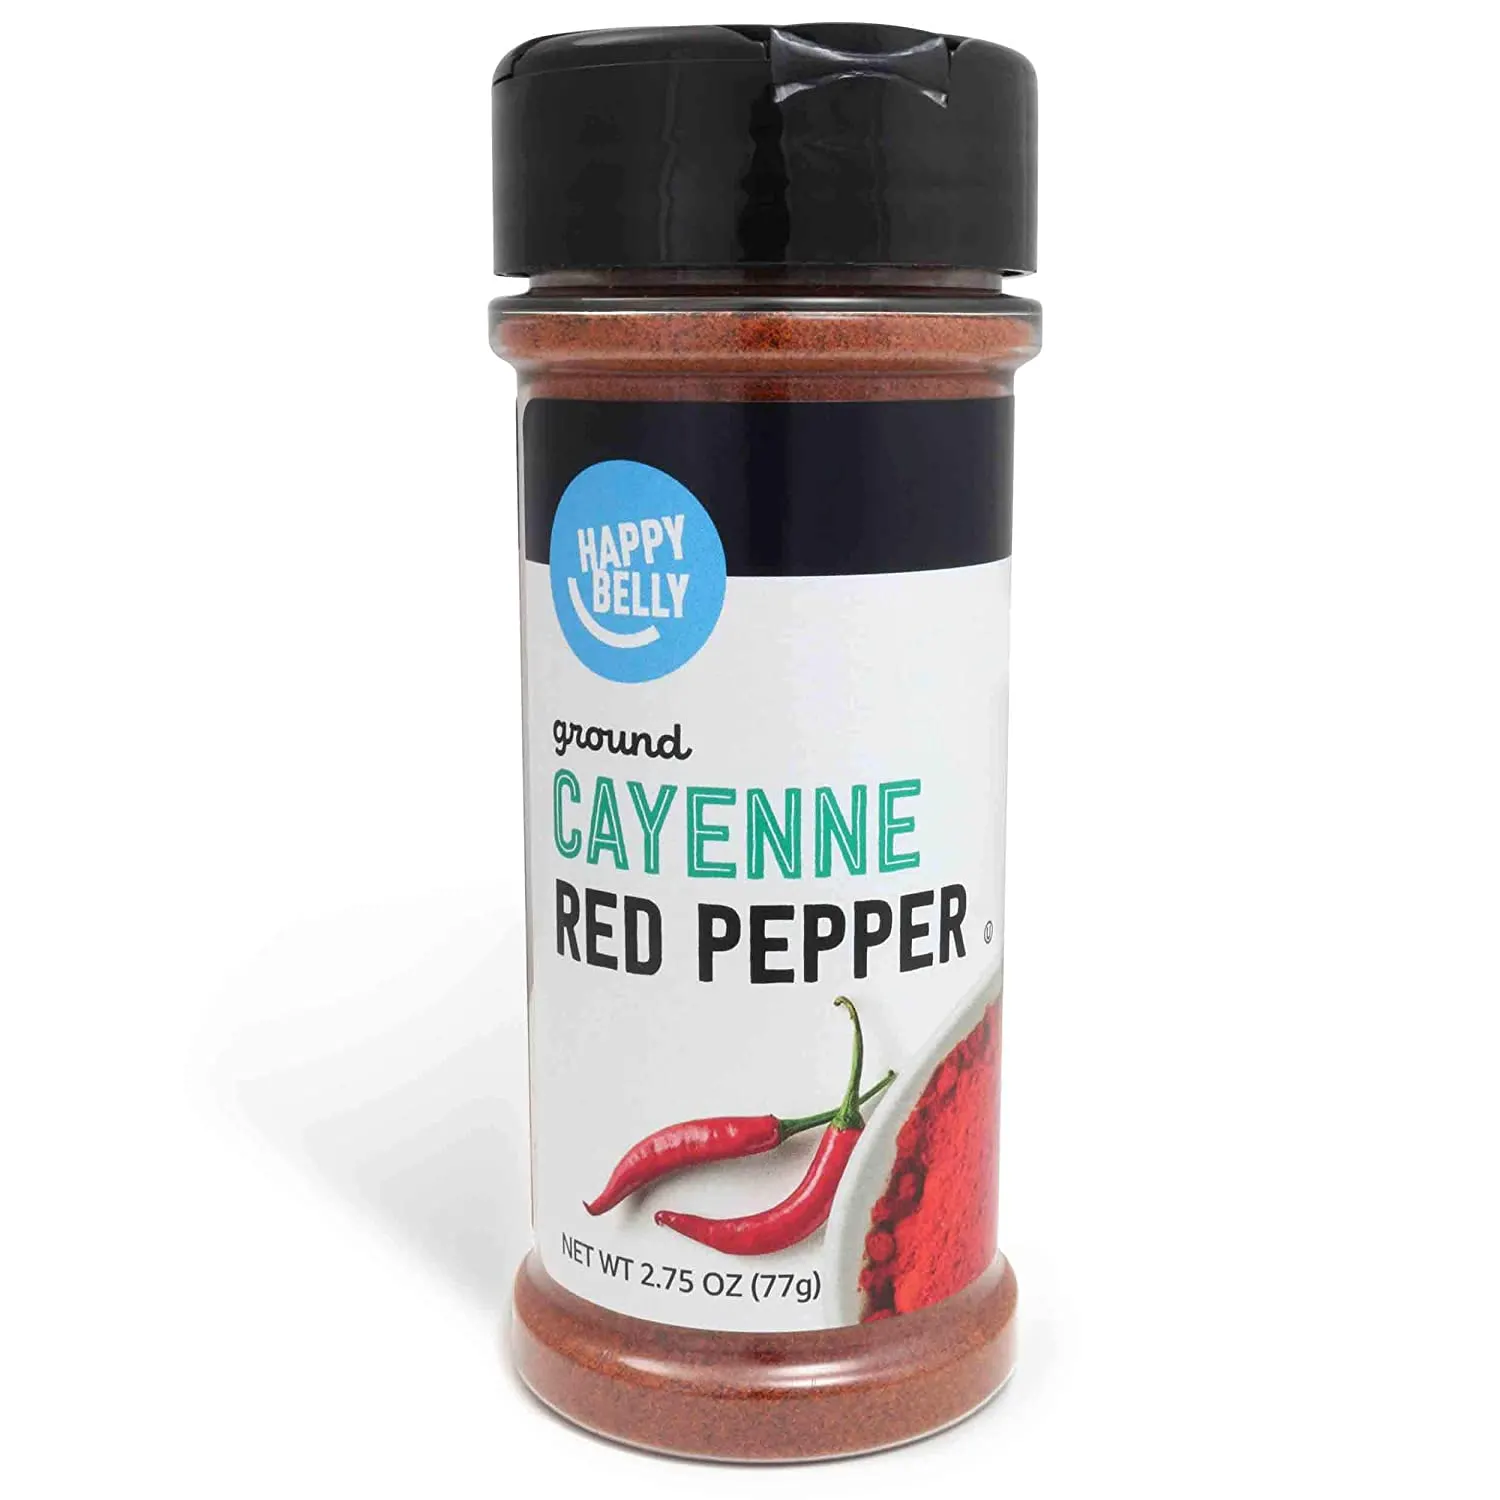 Cayenne Red Pepper, Ground